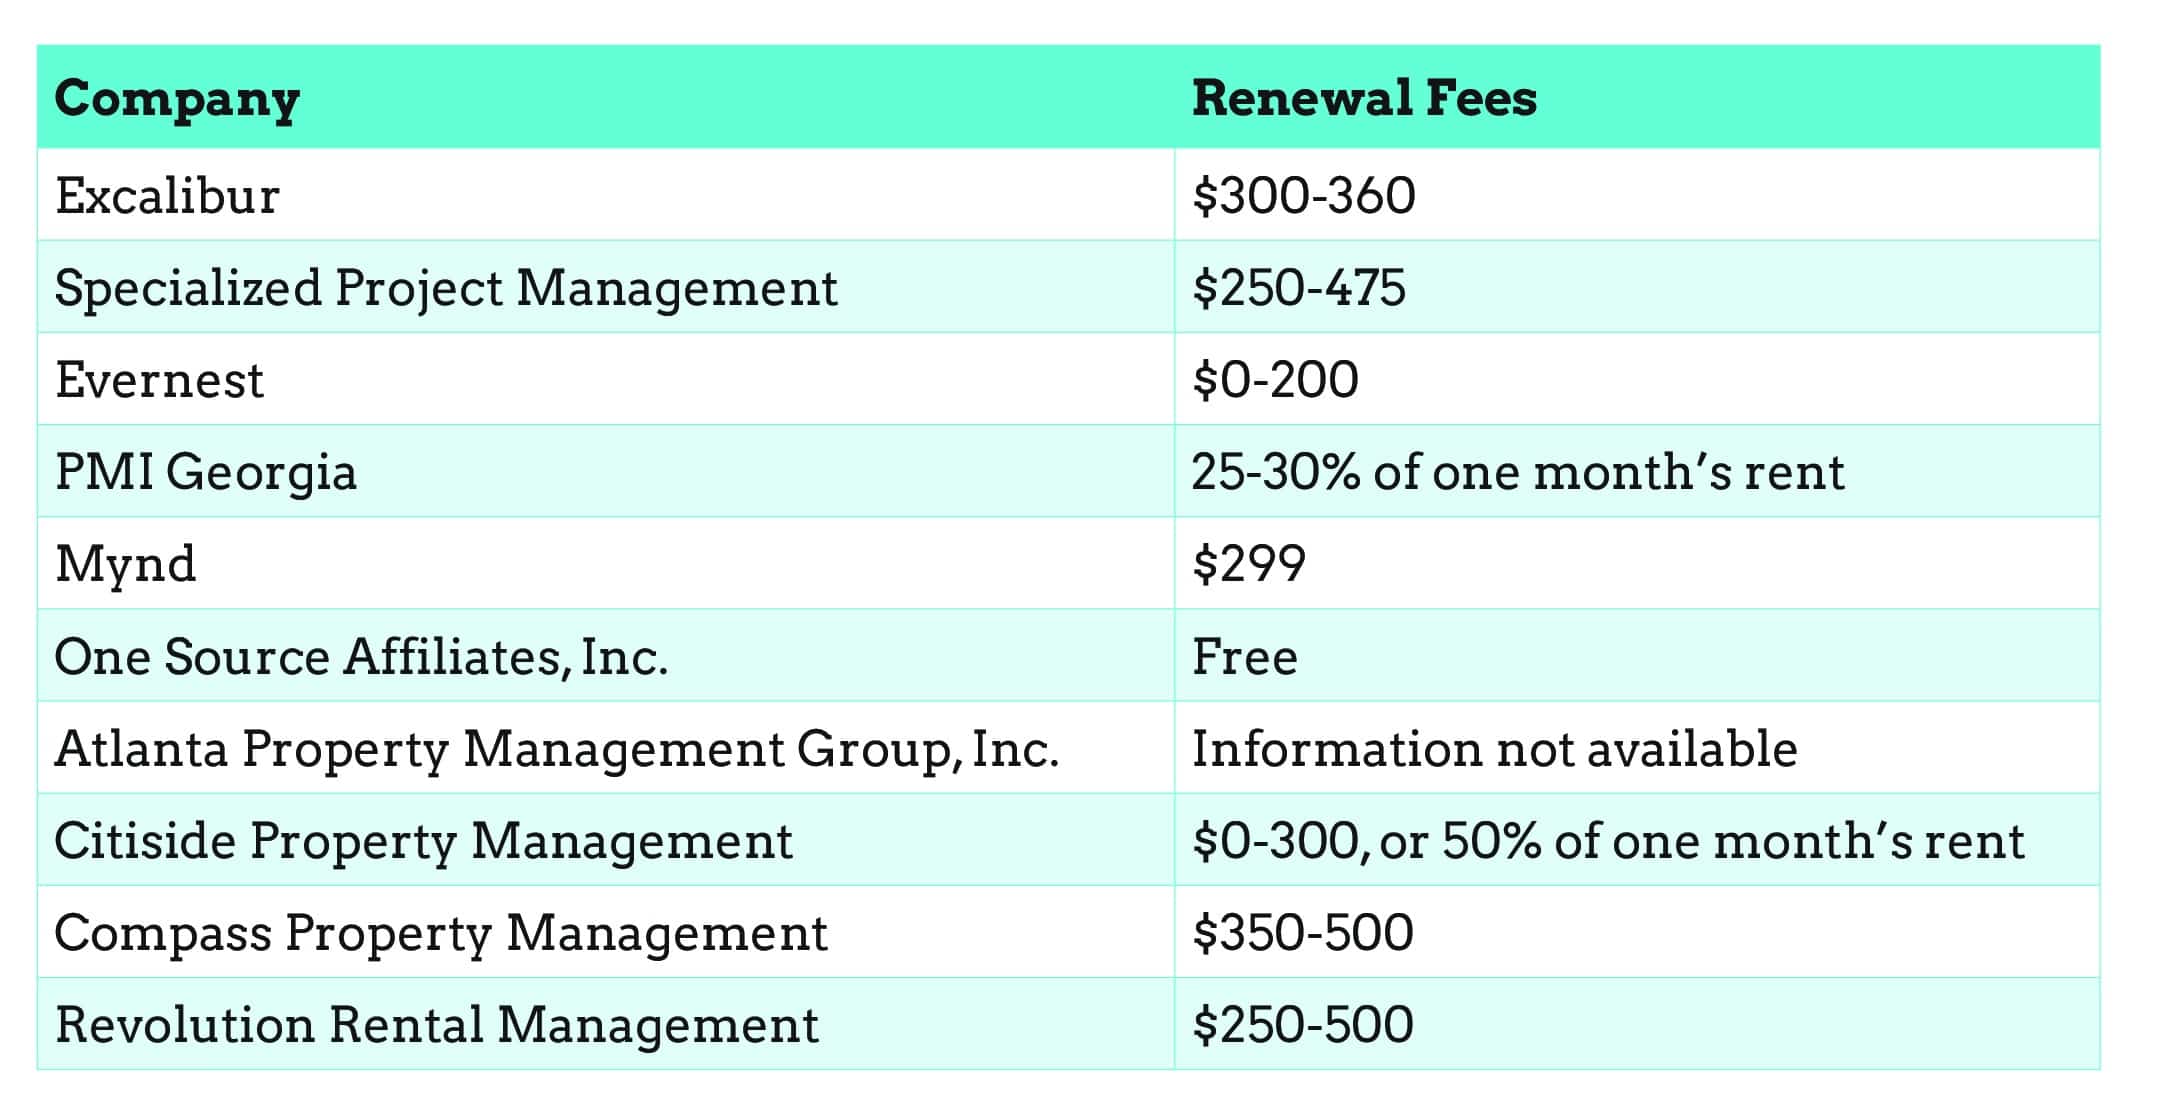 renewal-fees